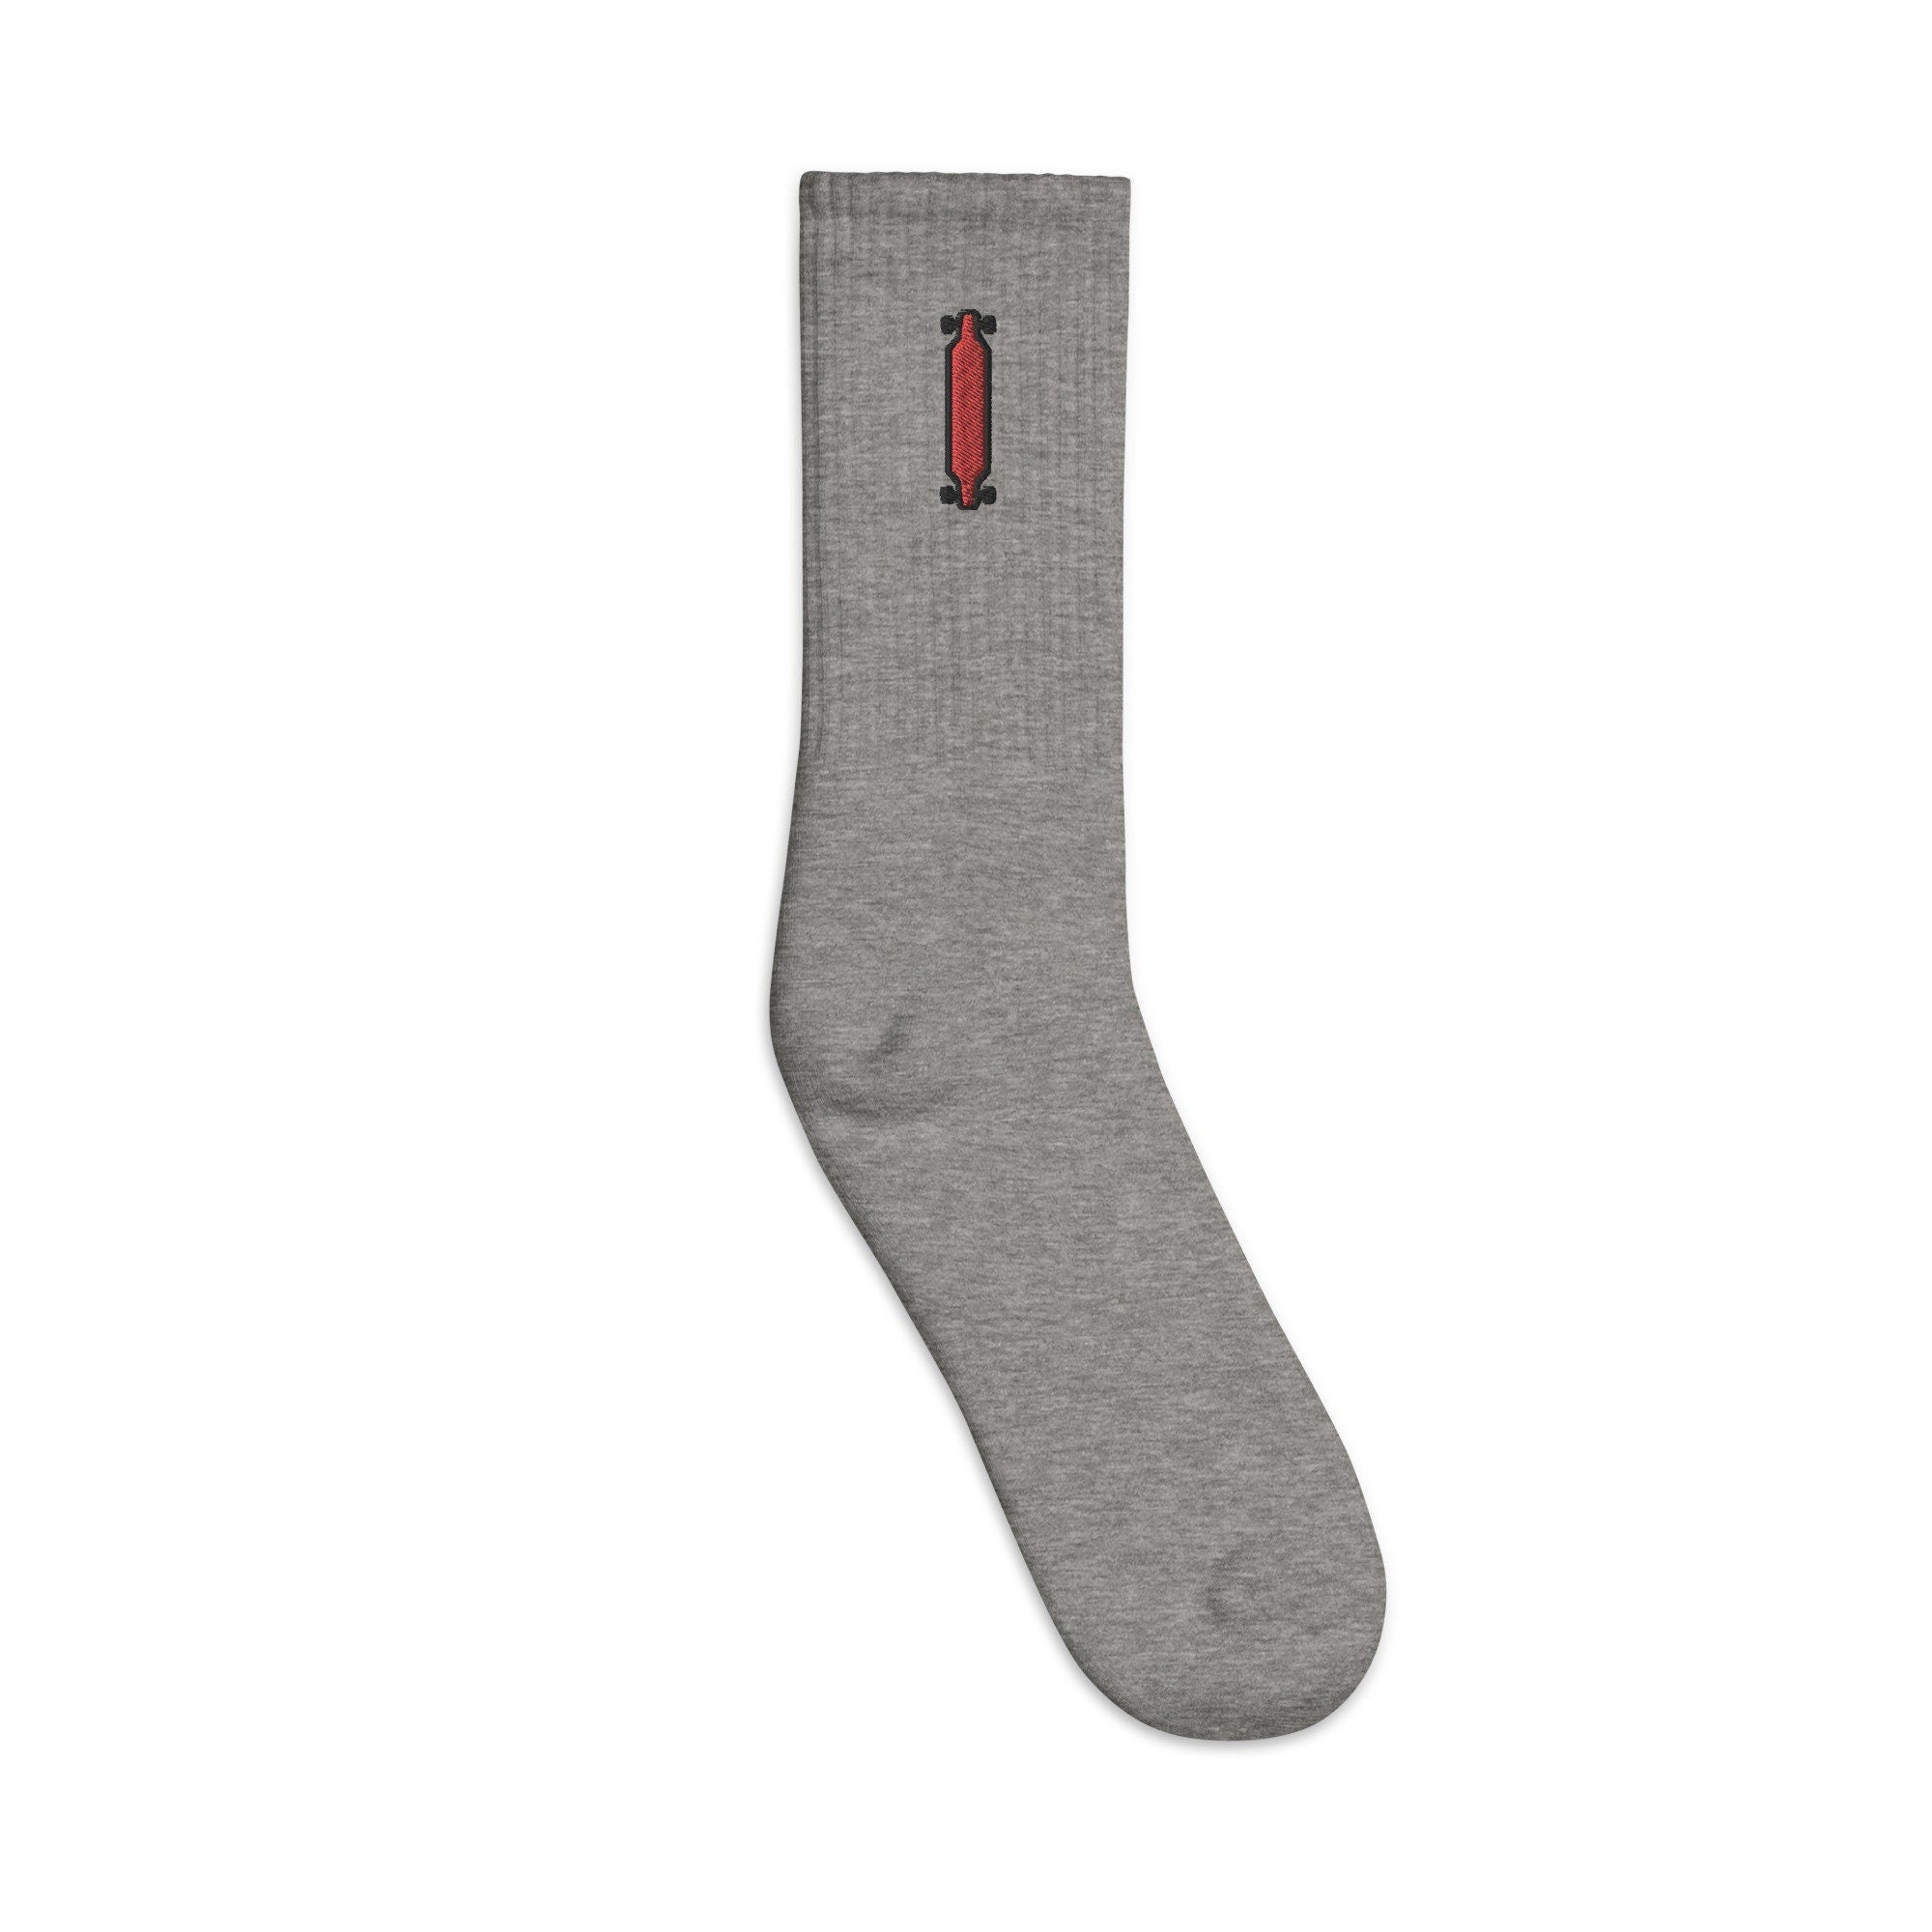 Longboard Embroidered Socks, Premium Embroidered Socks, Long Socks Gift - Multiple Colors